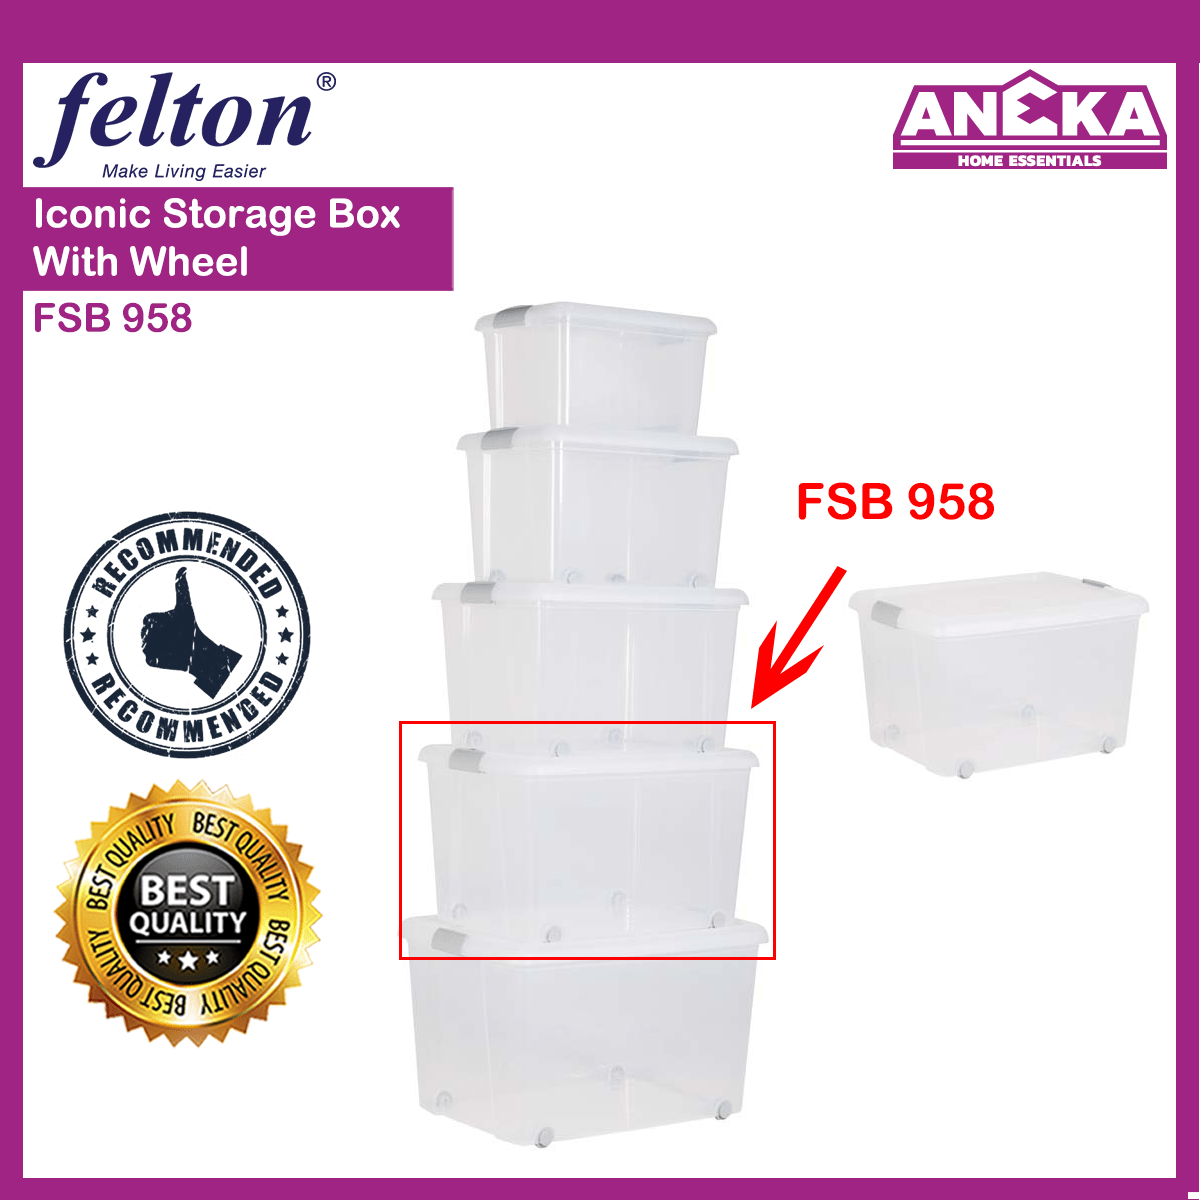 FSB958 Felton Iconic Storage Box With Wheel